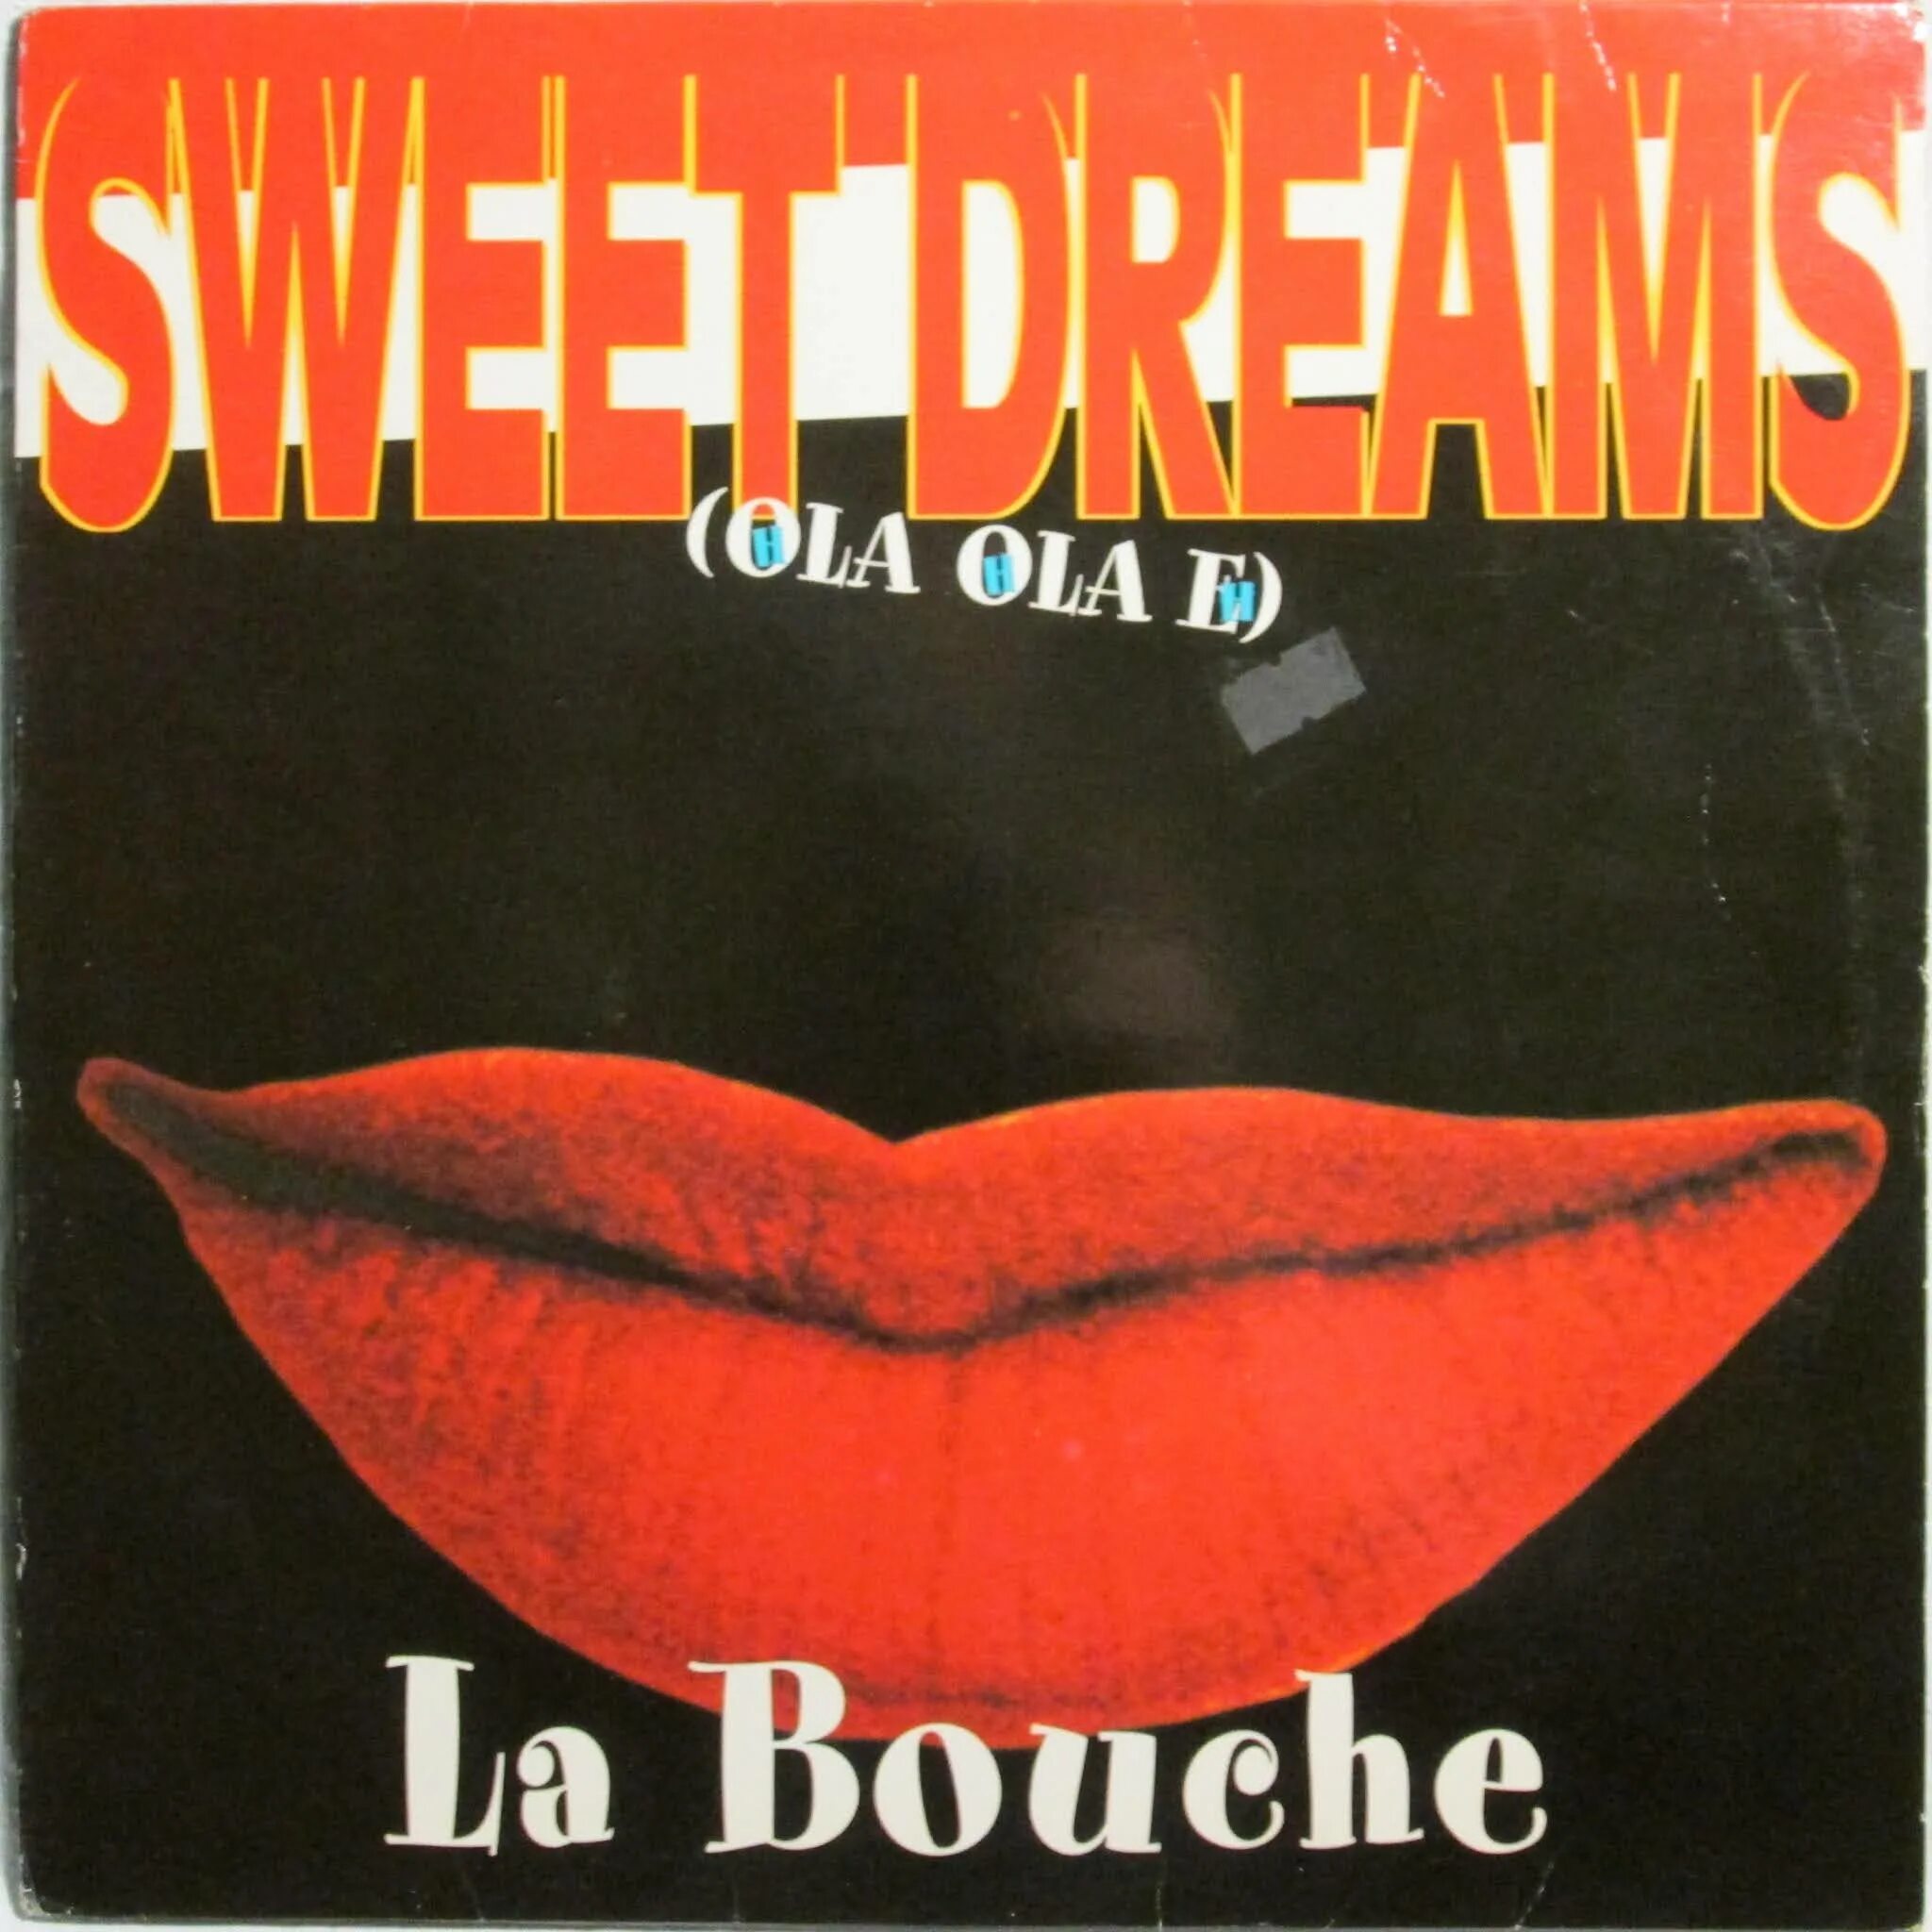 Bouche sweet. La bouche - 1994 - Sweet Dreams (Ola Ola e) CDM. Свит дримс ля Буш. La bouche - Sweet Dreams (1995). La bouche - 1994 - Sweet Dreams (Euro Mixes) CDM.